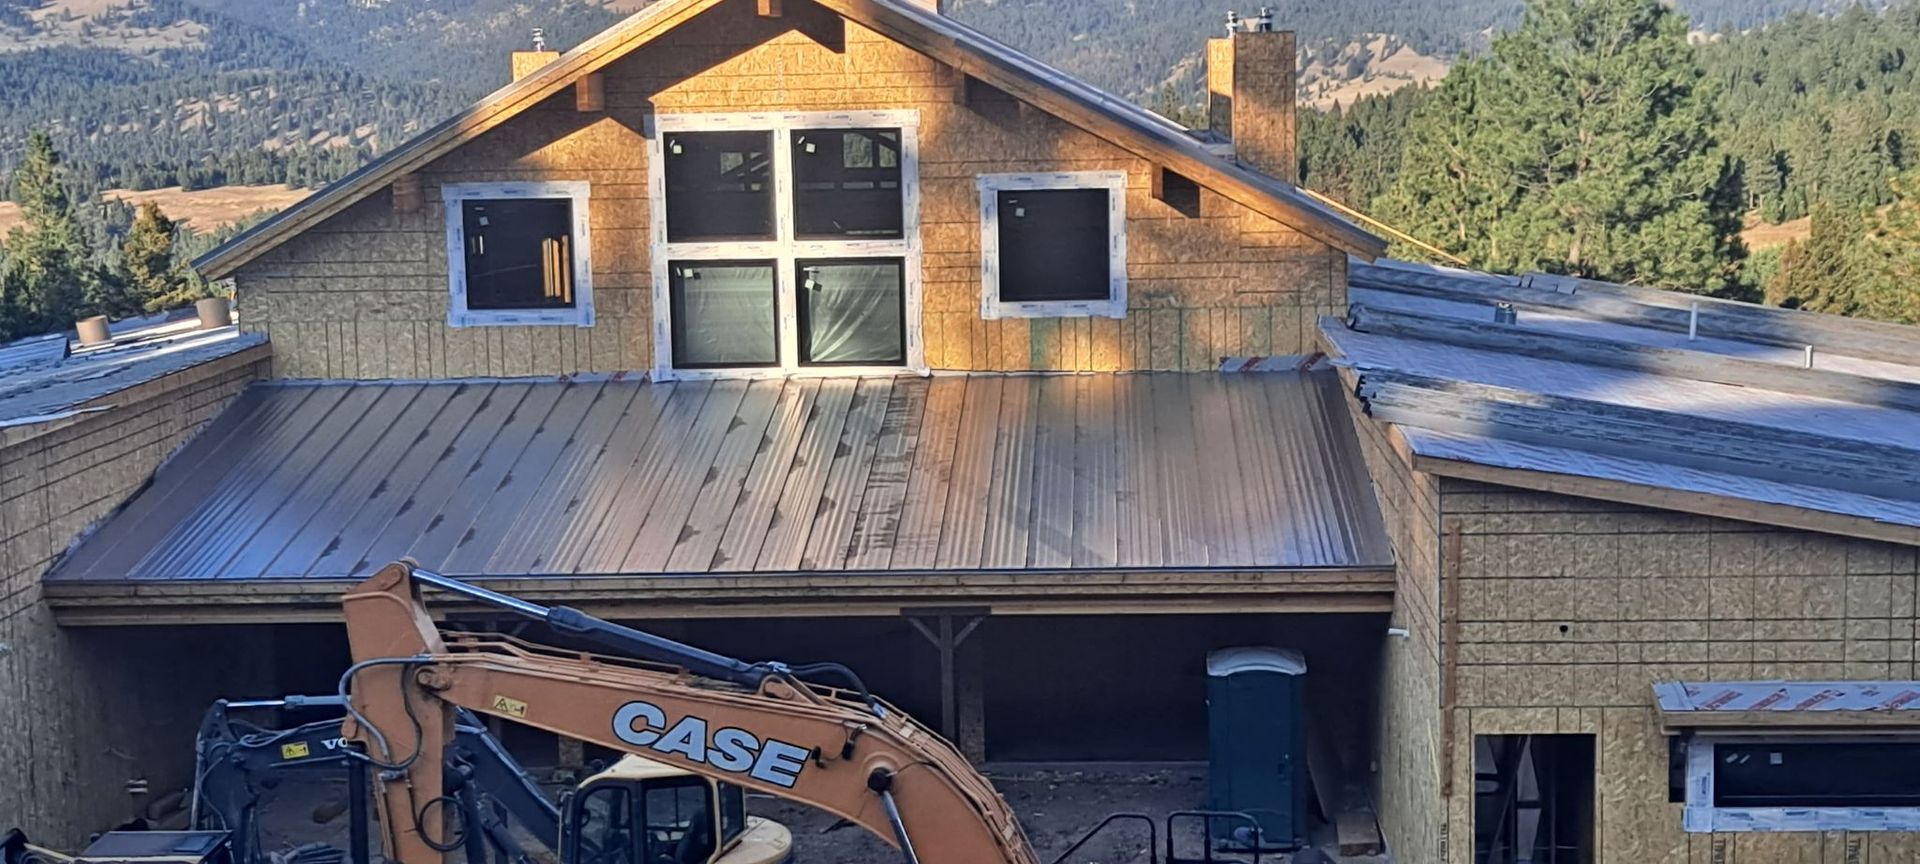 Kalispell Roofing Pros - Metal roofing - metal roof installation